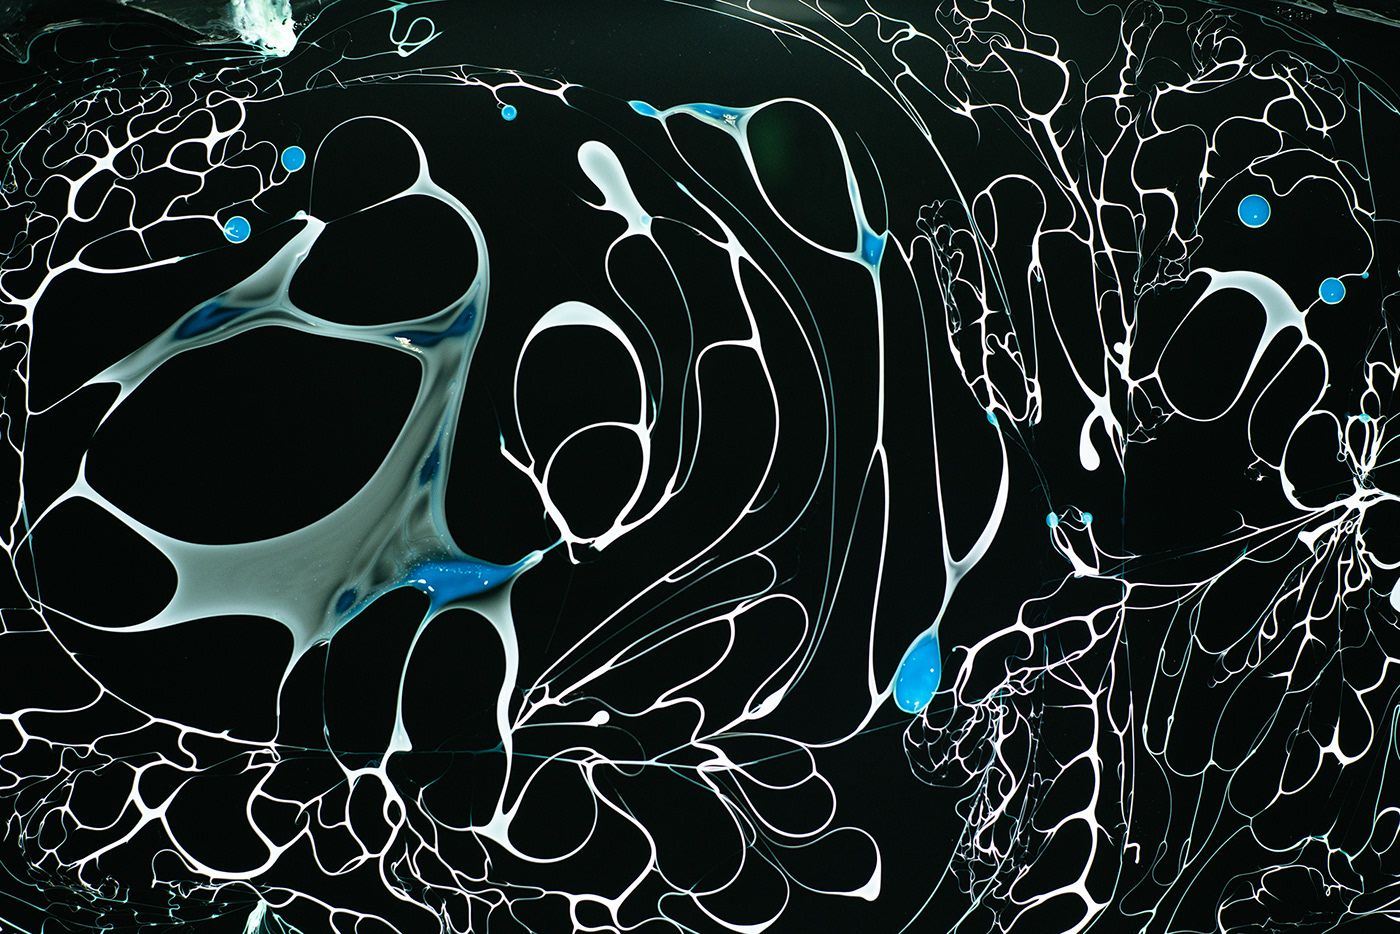 Photography  macro Ocean organisms radiolaria biology cells fictional fractals арт